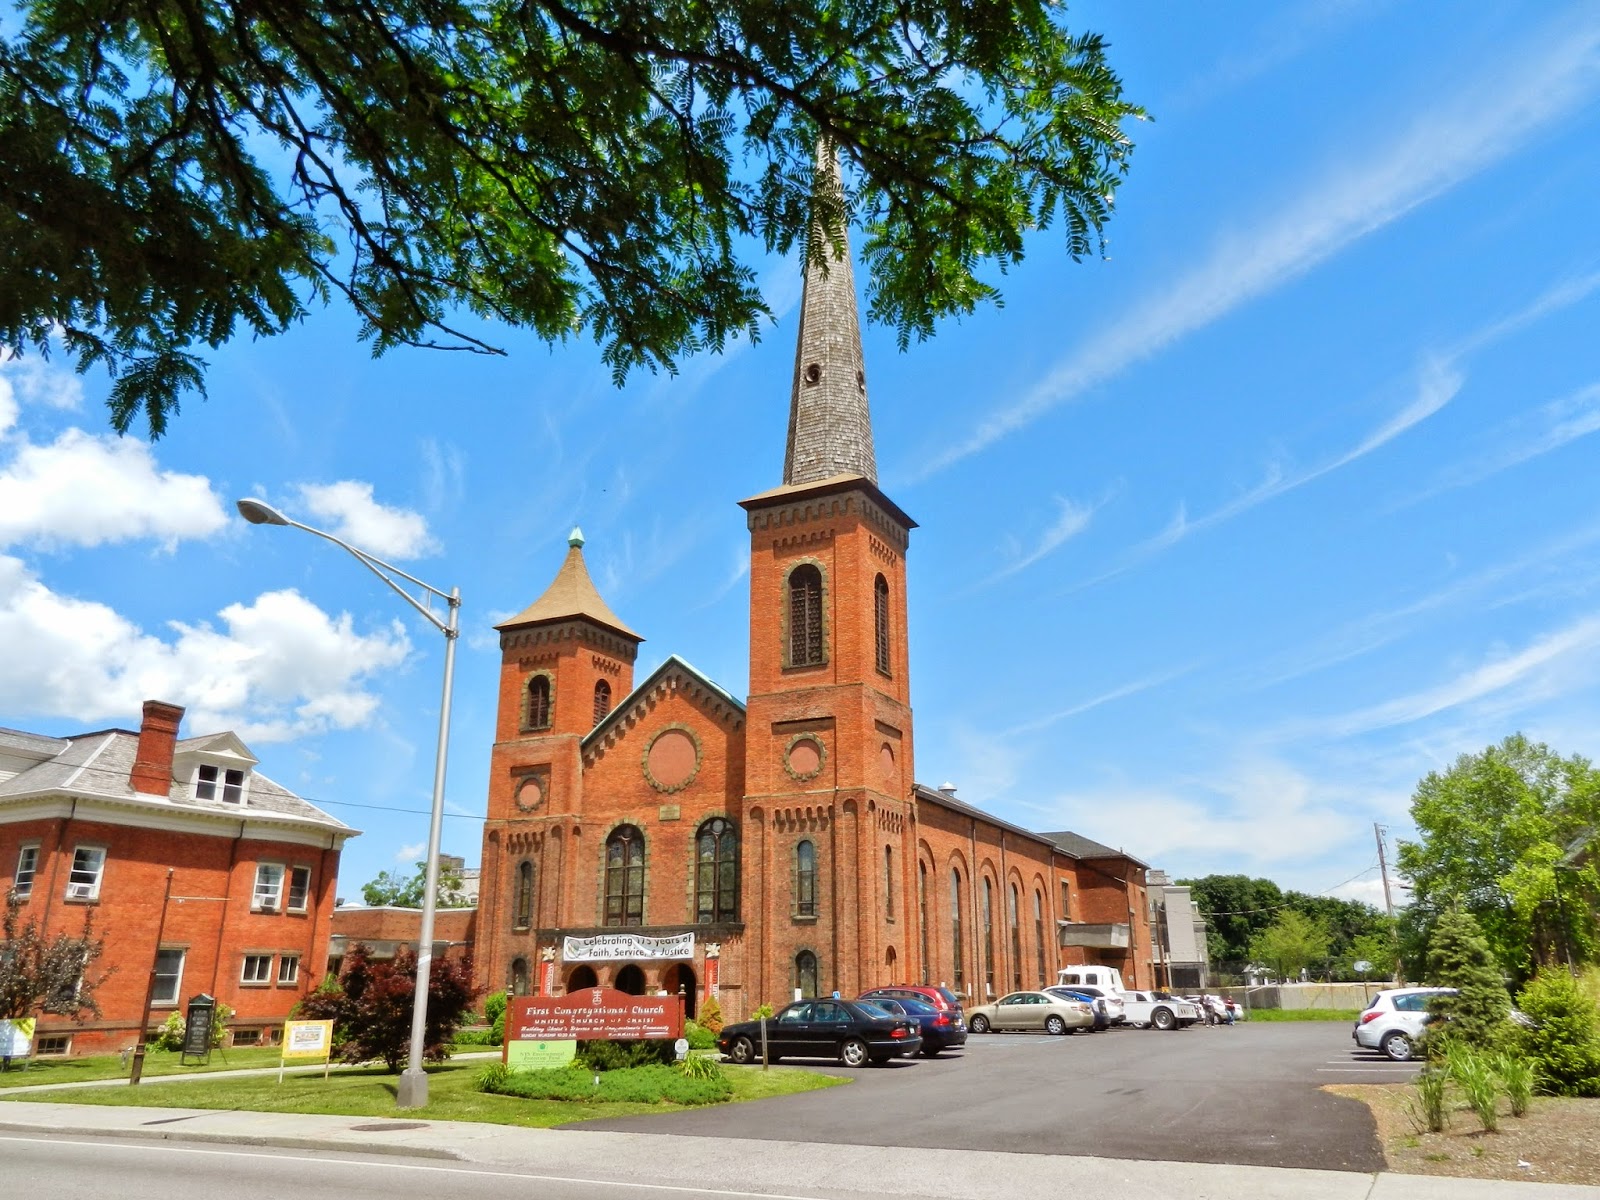 First Congregational Church of Poughkeepsie